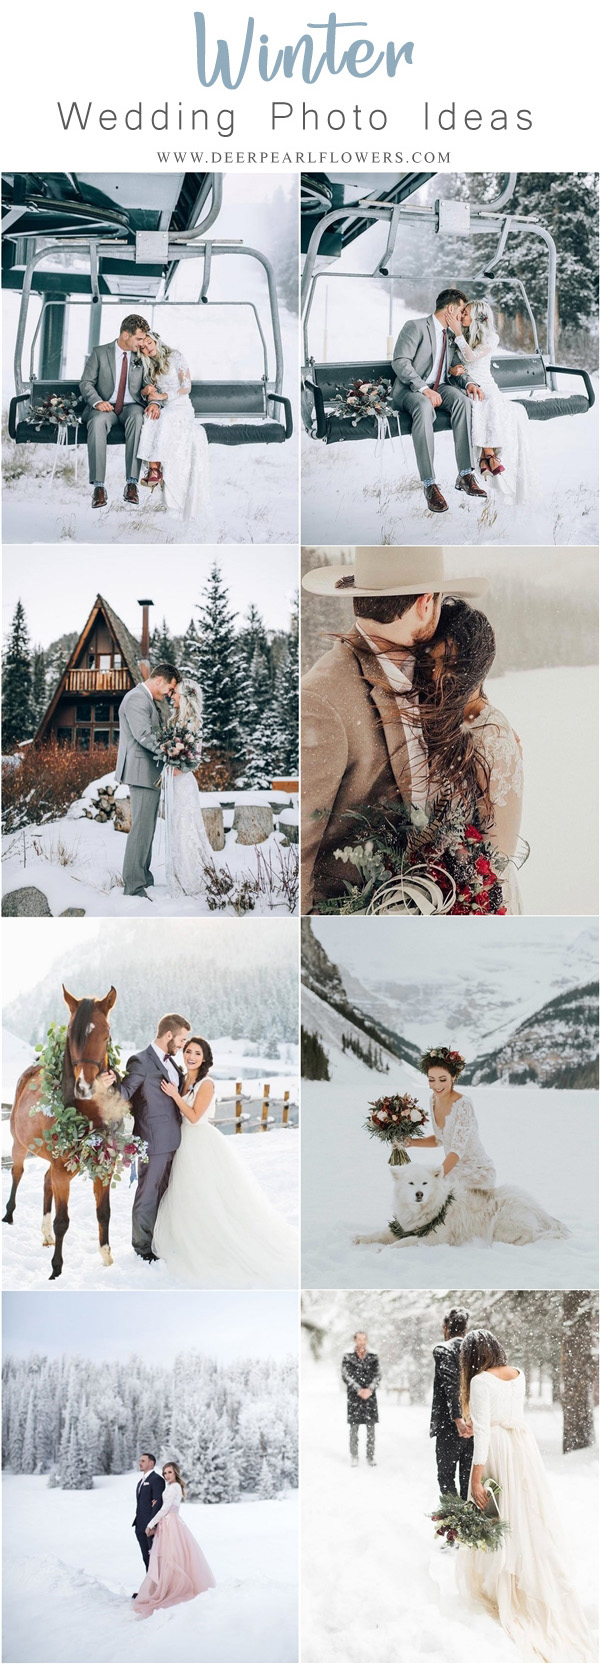 Winter wedding ideas - Winter Wedding Photography Ideas